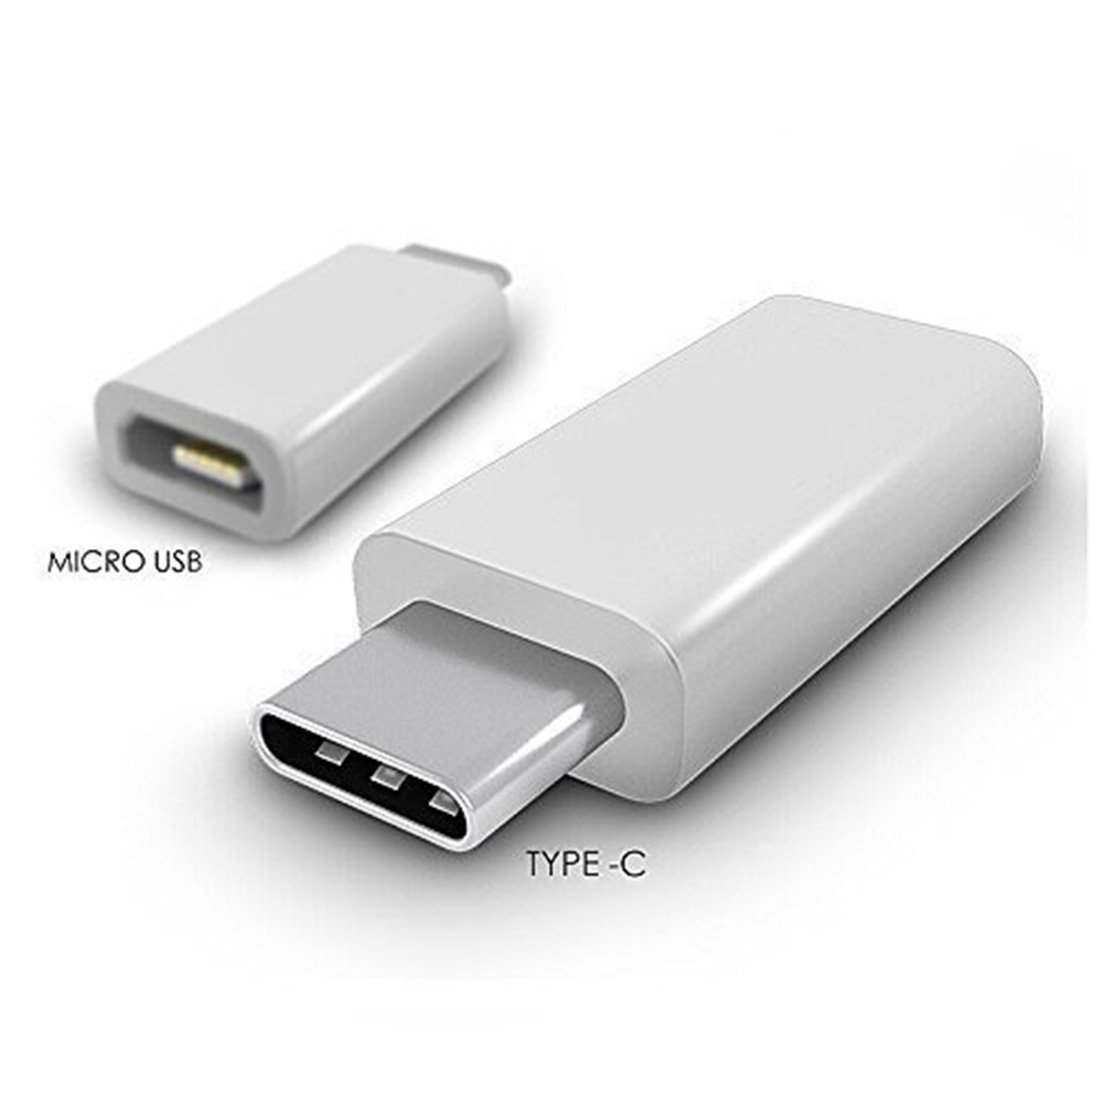 Тайпси вход. Переходник USB 2.0 Type a male to Type c. USB C Micro USB. Переходник микро USB Type c OTG переходник. Микро юсб Type c.